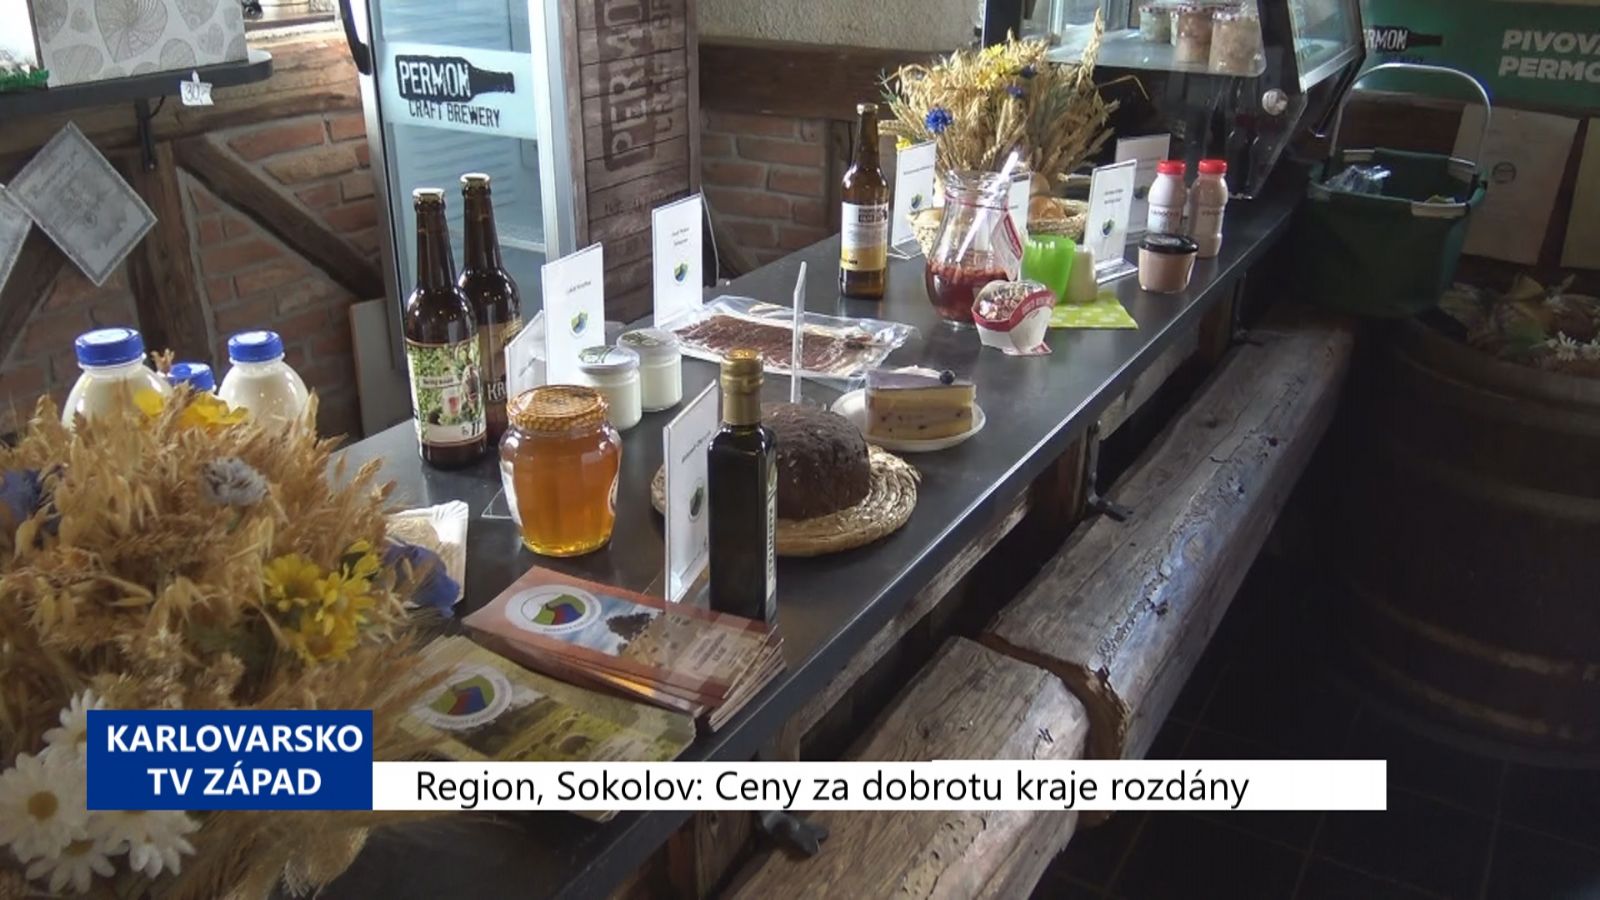 Region, Sokolov: Ceny za dobrotu kraje byly rozdány (TV Západ)